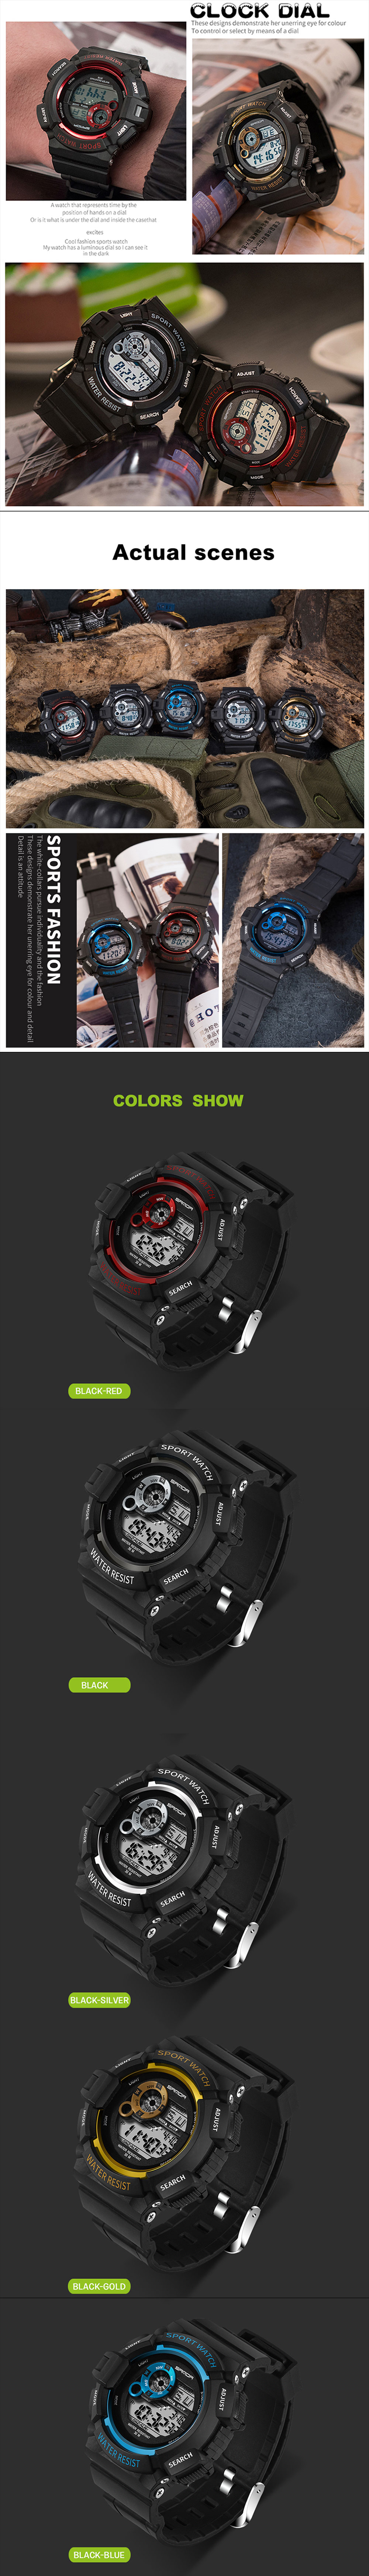 SANDA-302-Digital-Watch-Men-Stopwatch-Calendar-30M-Waterproof-Outdoor-Watch-Fashion-Dial-Sport-Watch-1293382